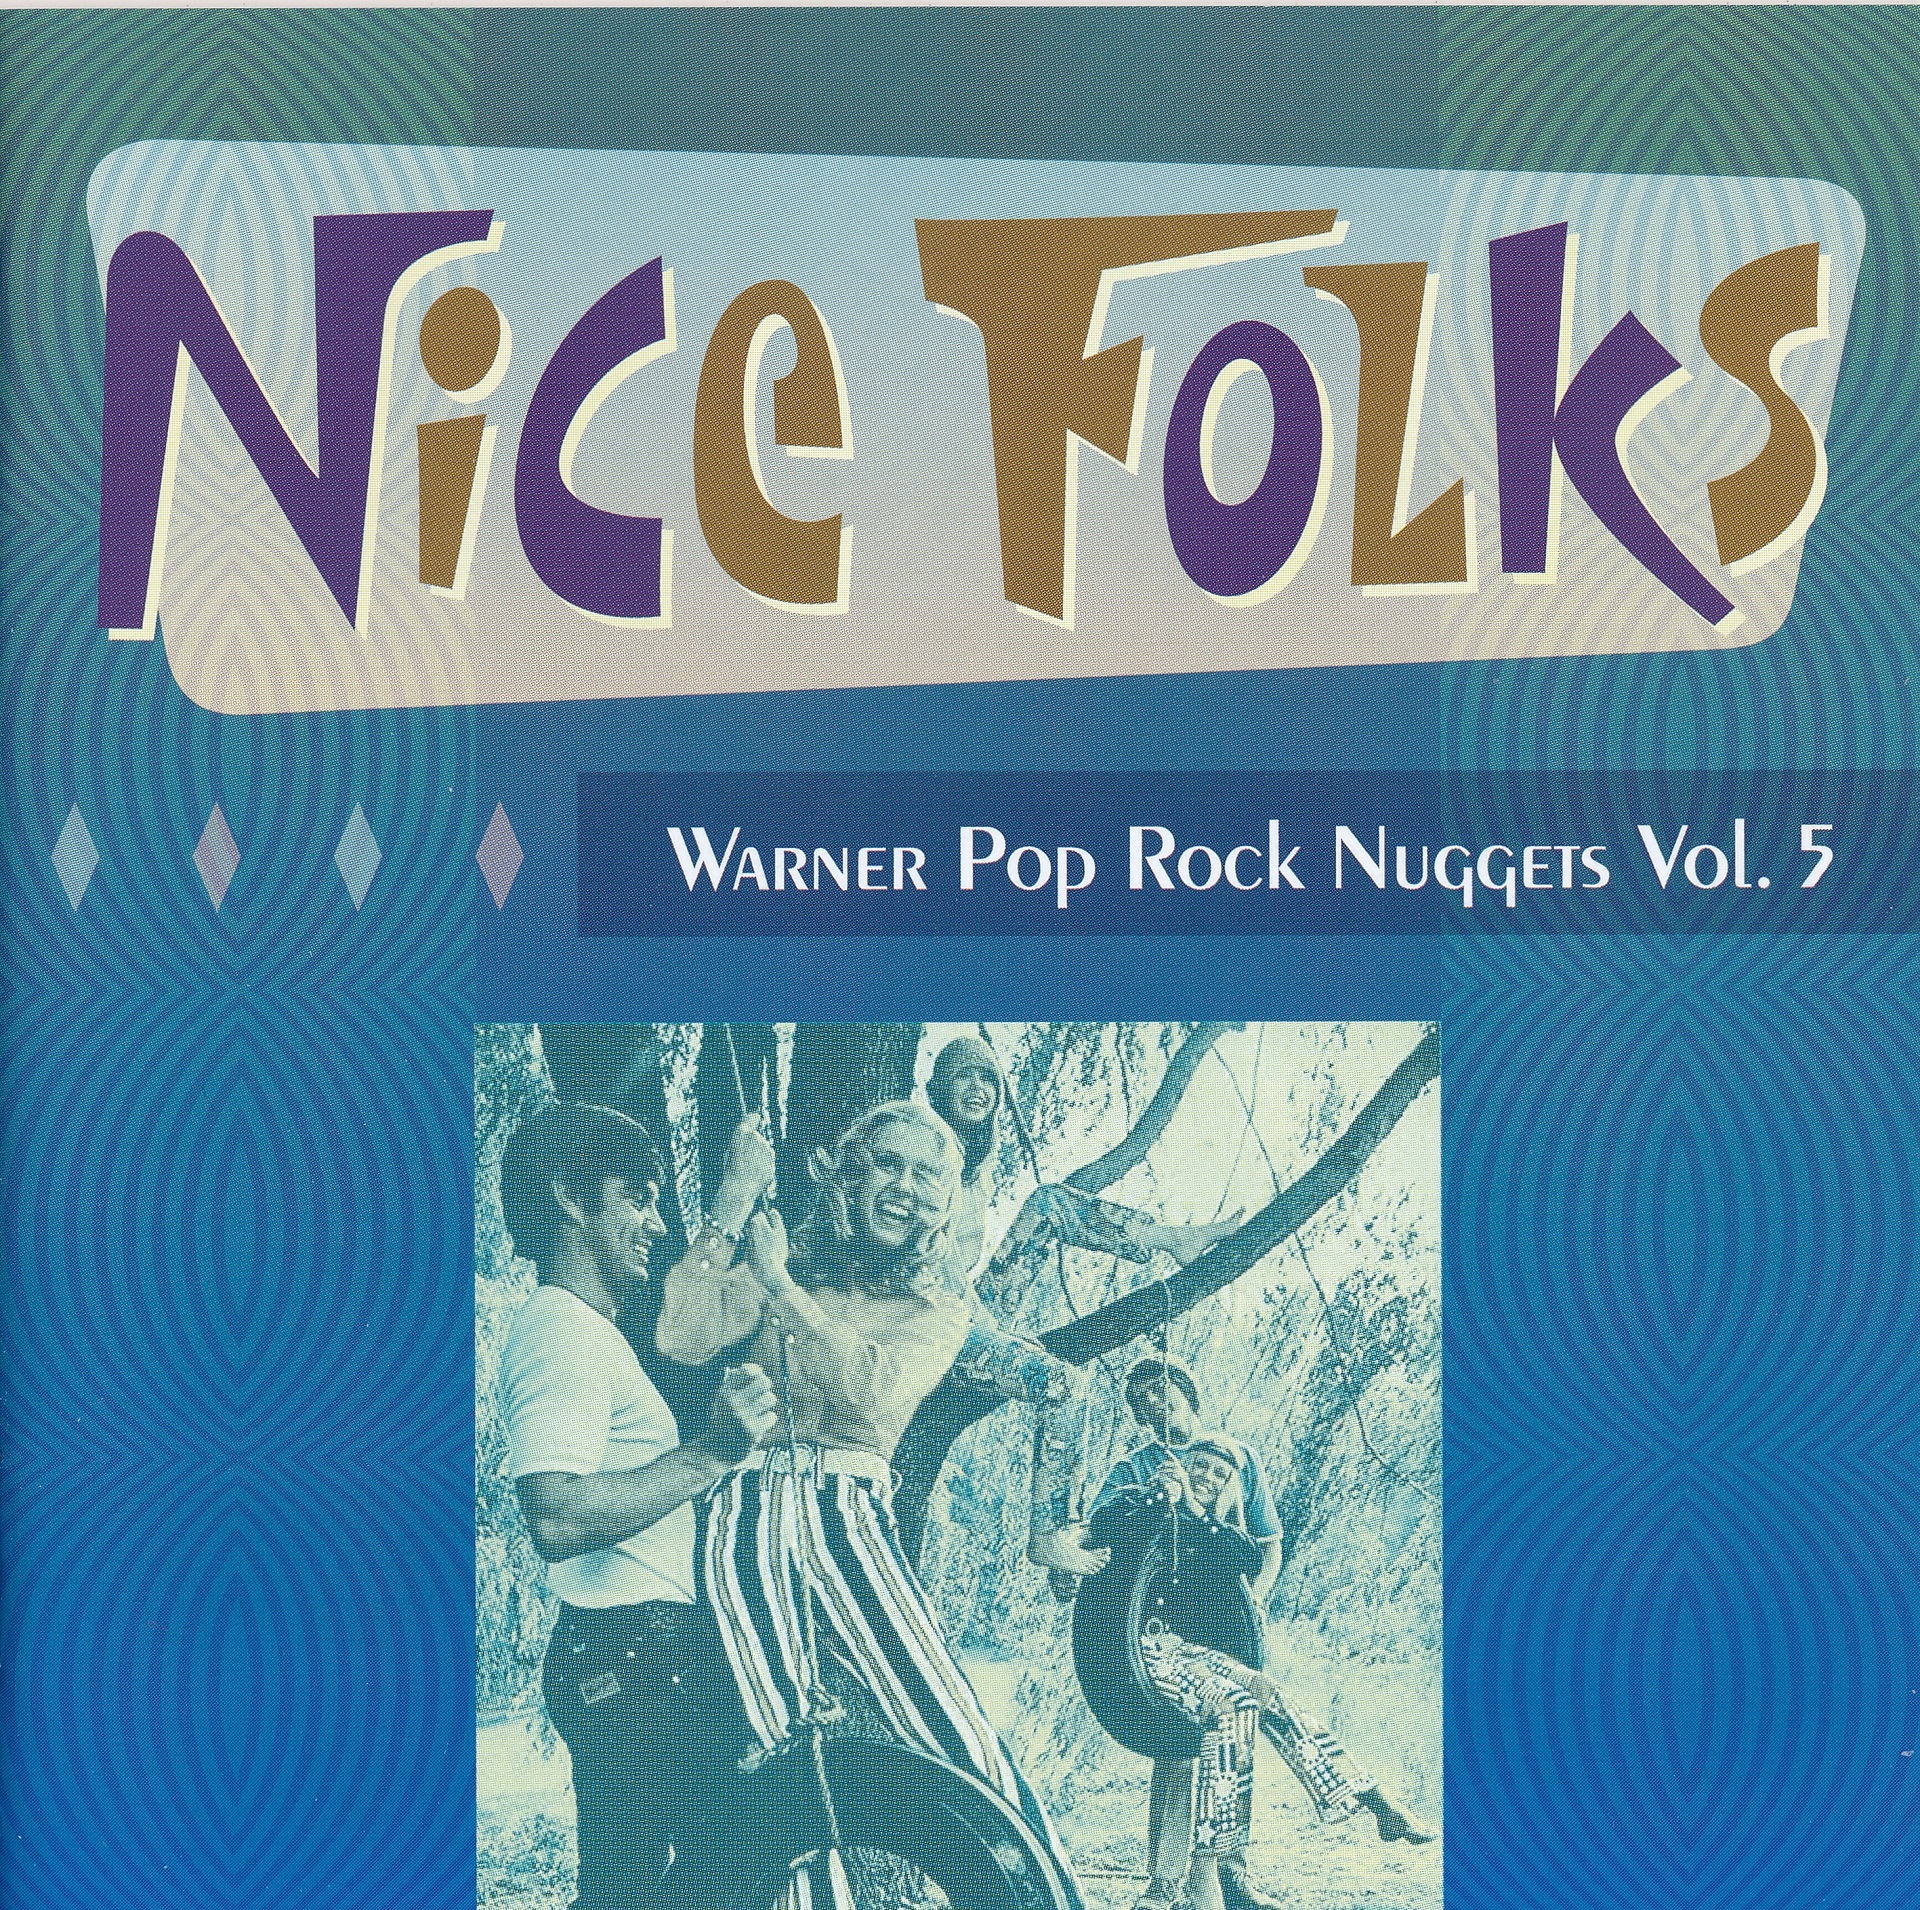 Warner Pop Rock Nuggets Volume 5 Nice Folks